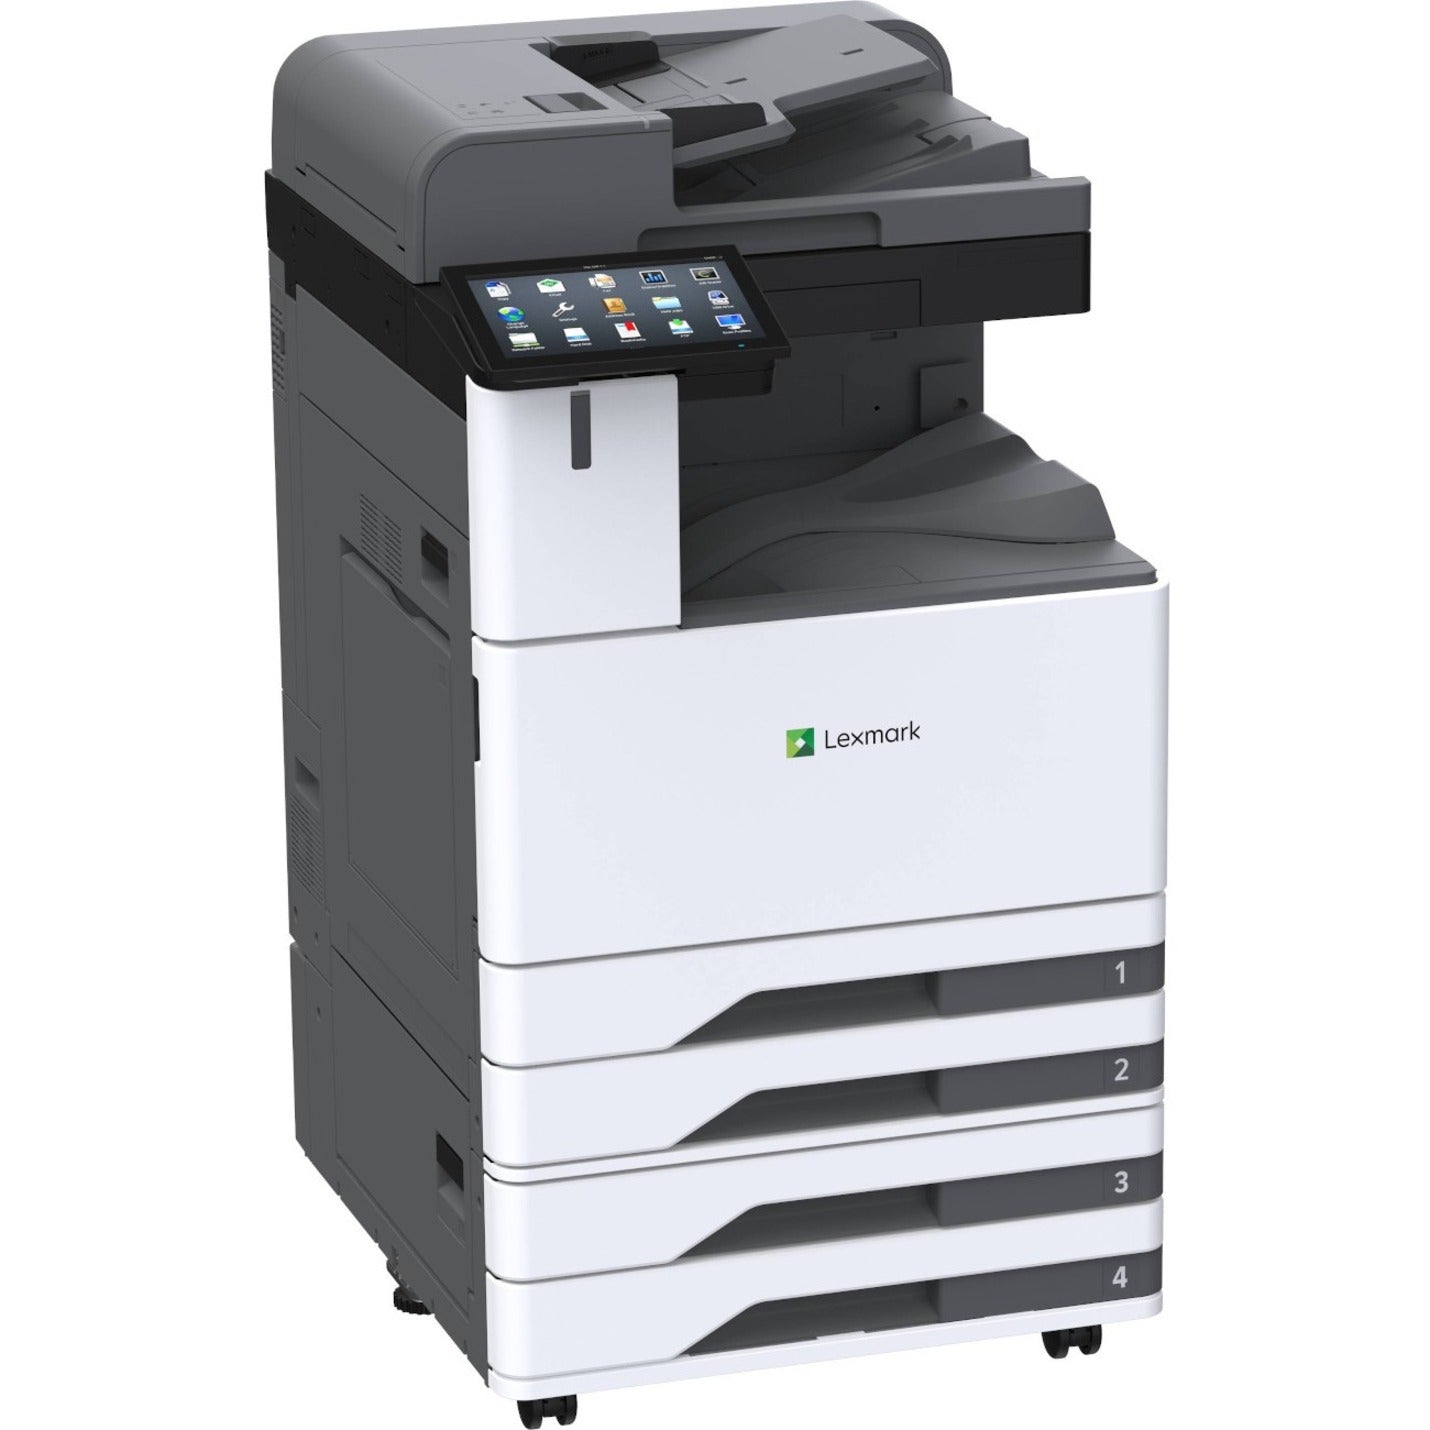 Lexmark 32D0450 CX944adtse Laser Multifunction Printer, Color, Automatic Duplex Printing, 65 ppm, 2400 x 600 dpi